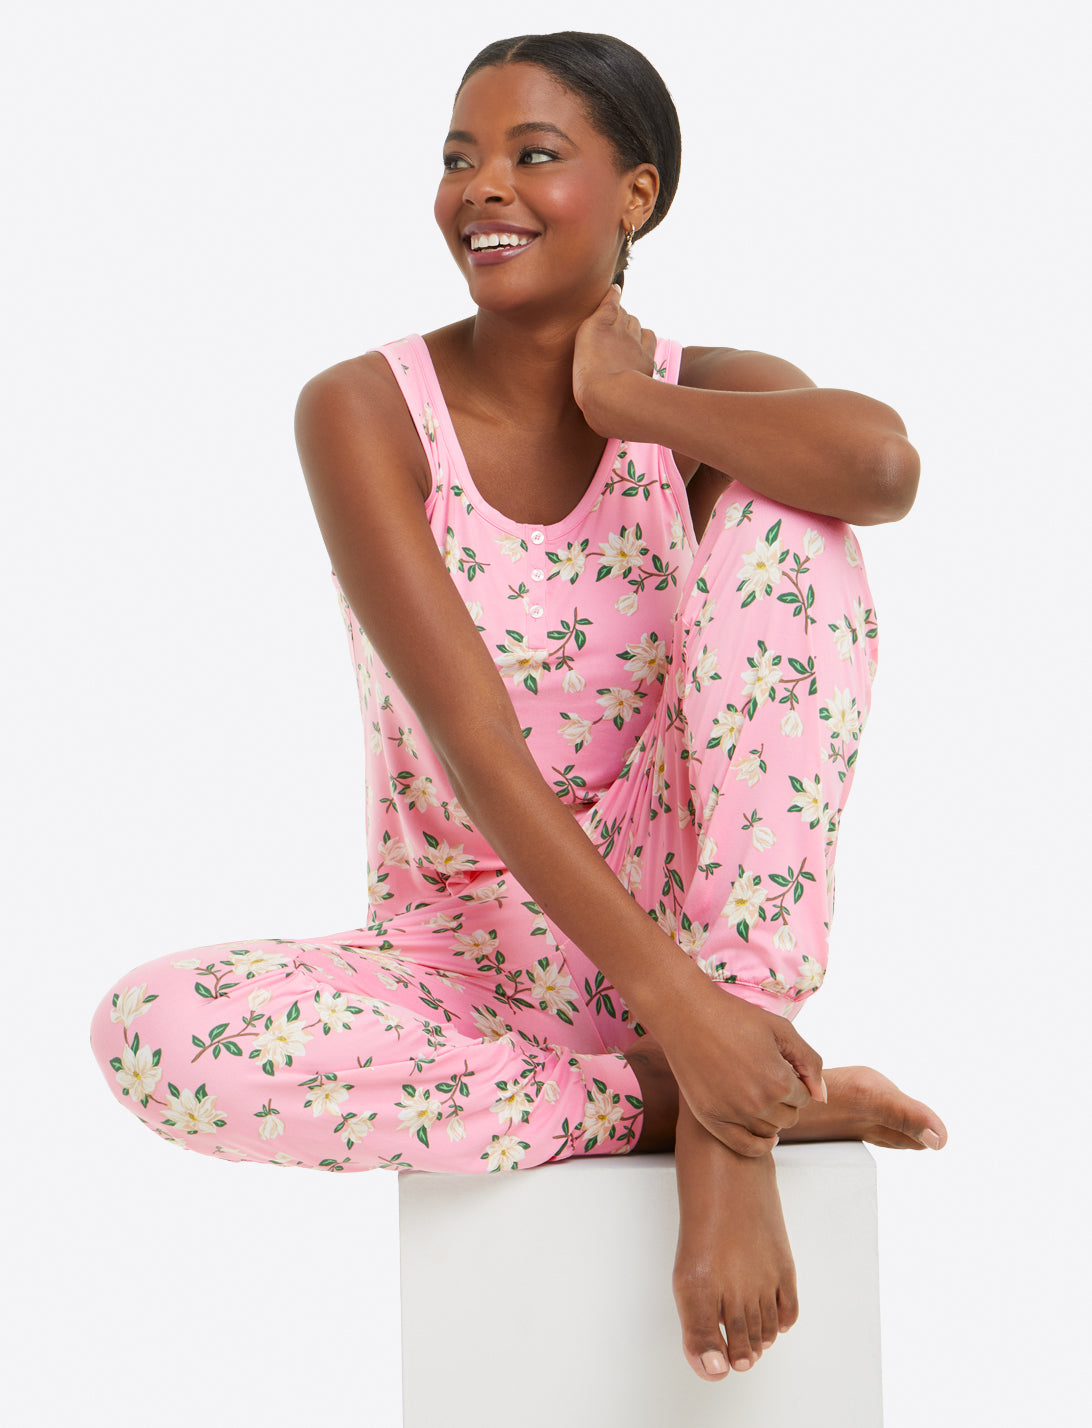 Hillary Pajama Set in Pink Magnolia